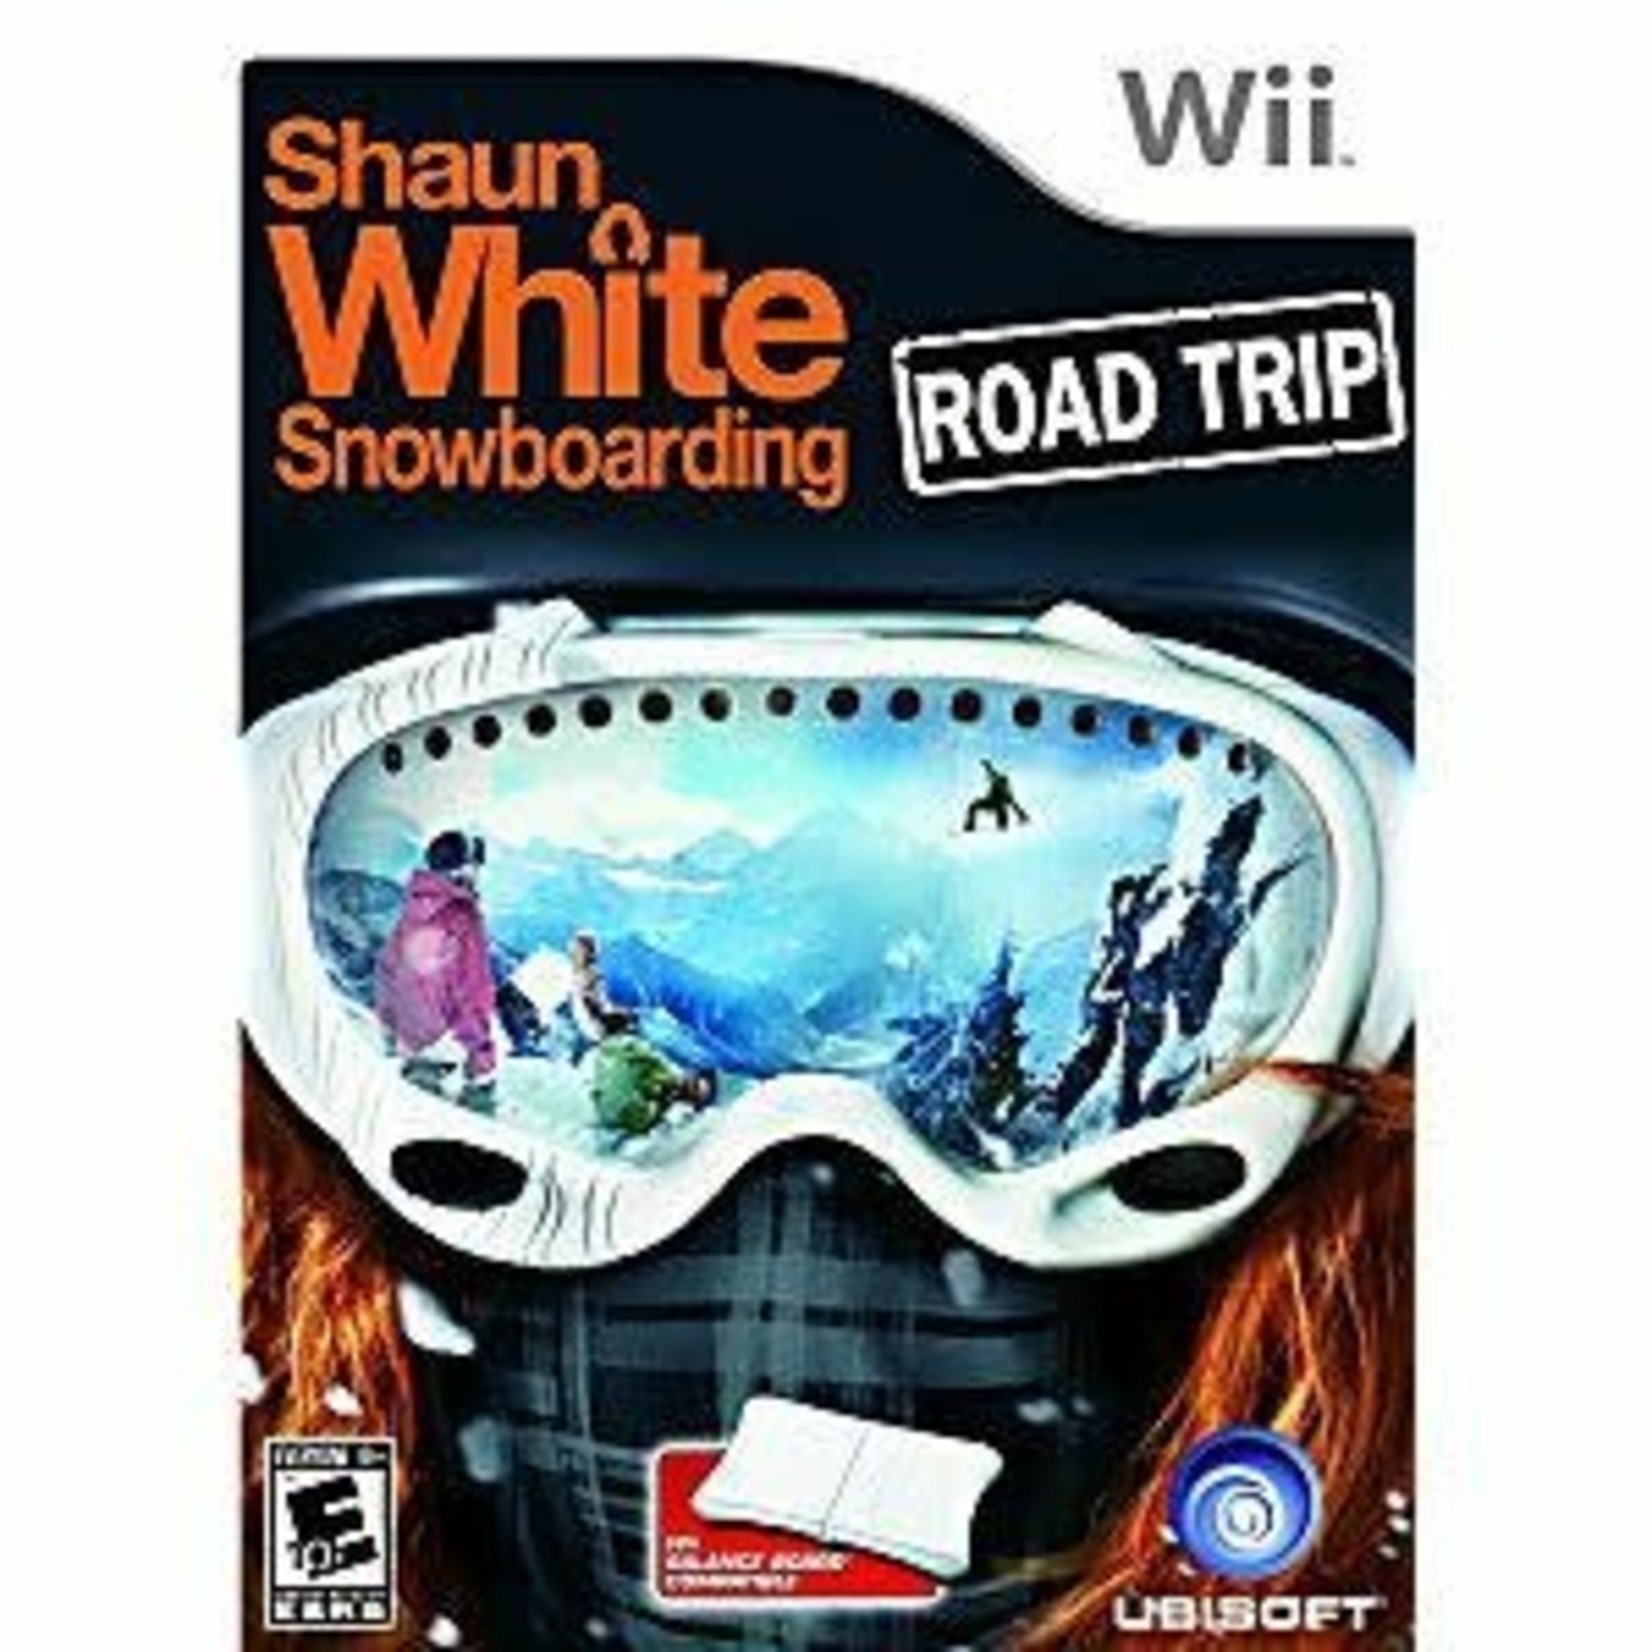 WIIUSD-Shaun White Snowboarding Road Trip